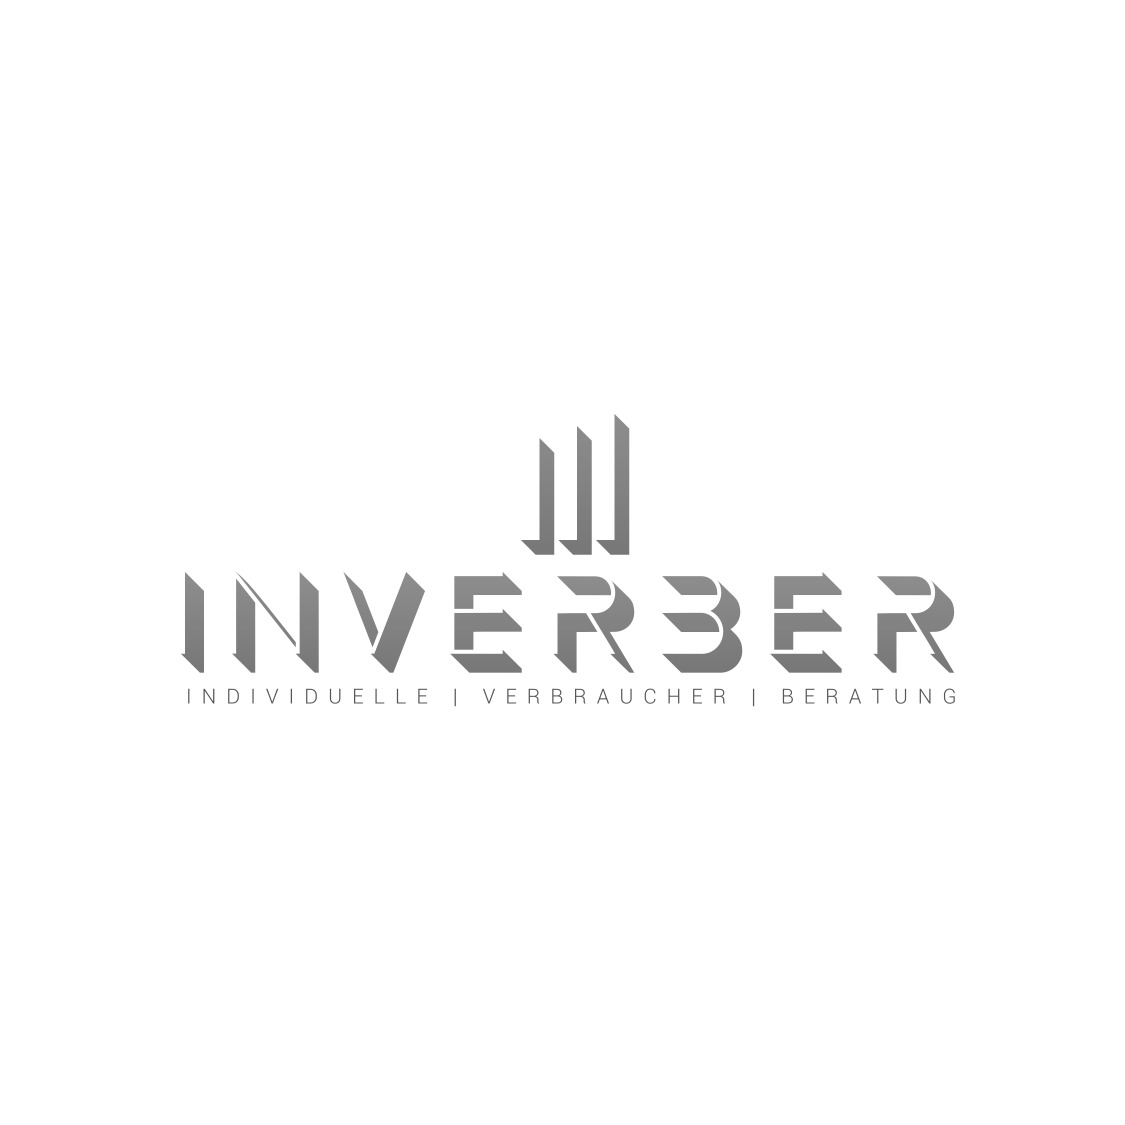 Inverber GbR Logo